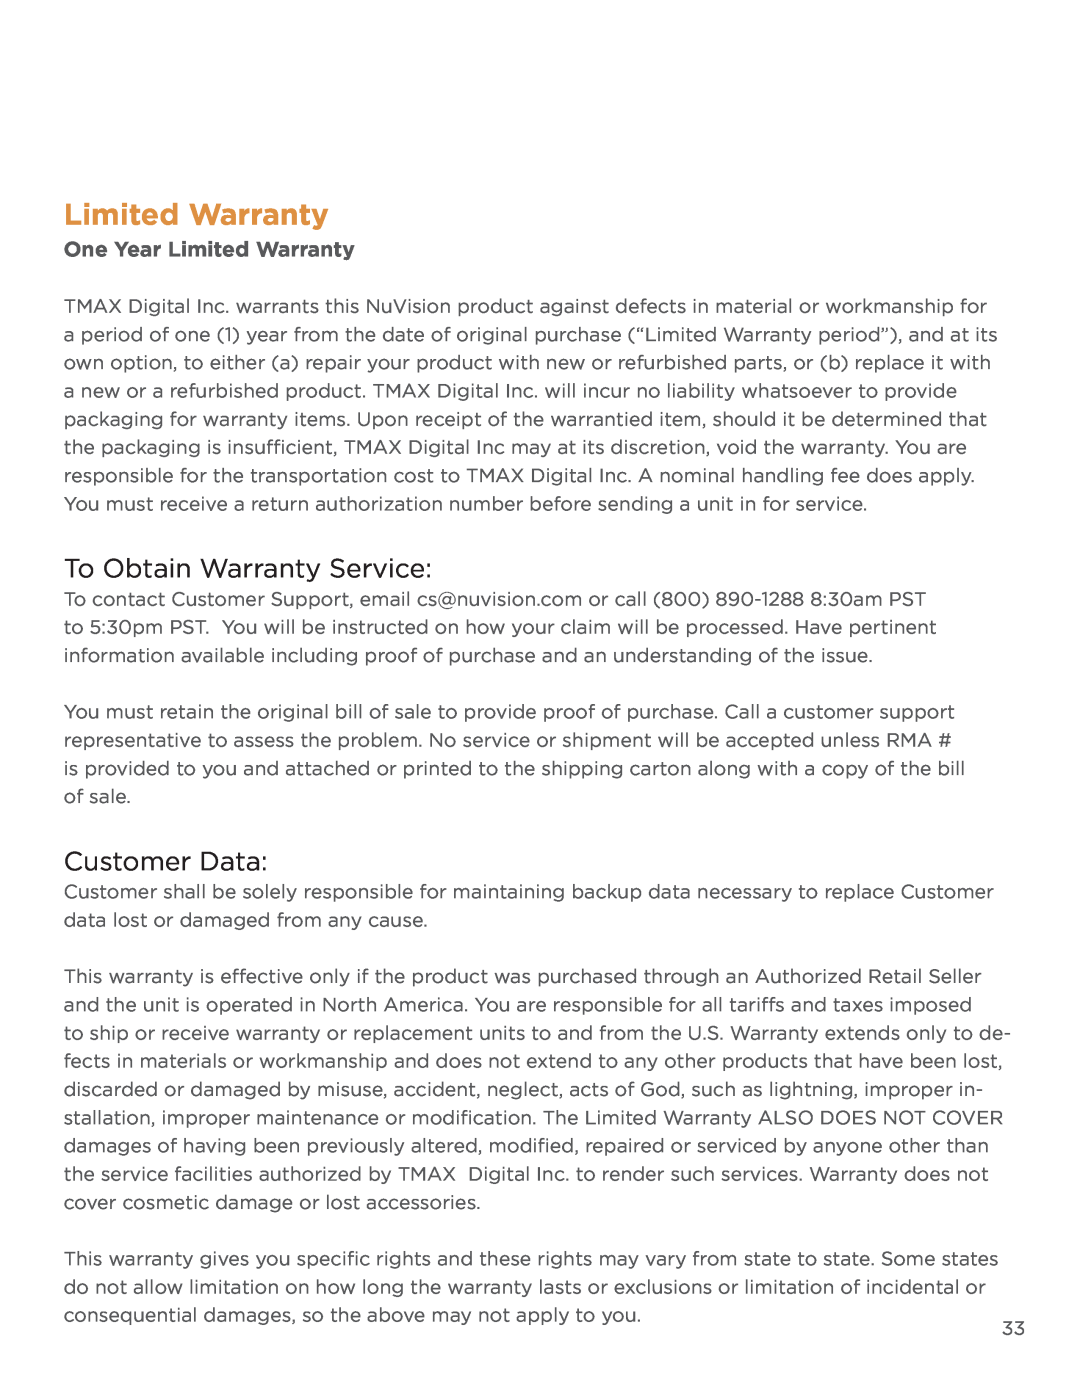 NuVision TM1218 user manual Limited Warranty, To Obtain Warranty Service, Customer Data 